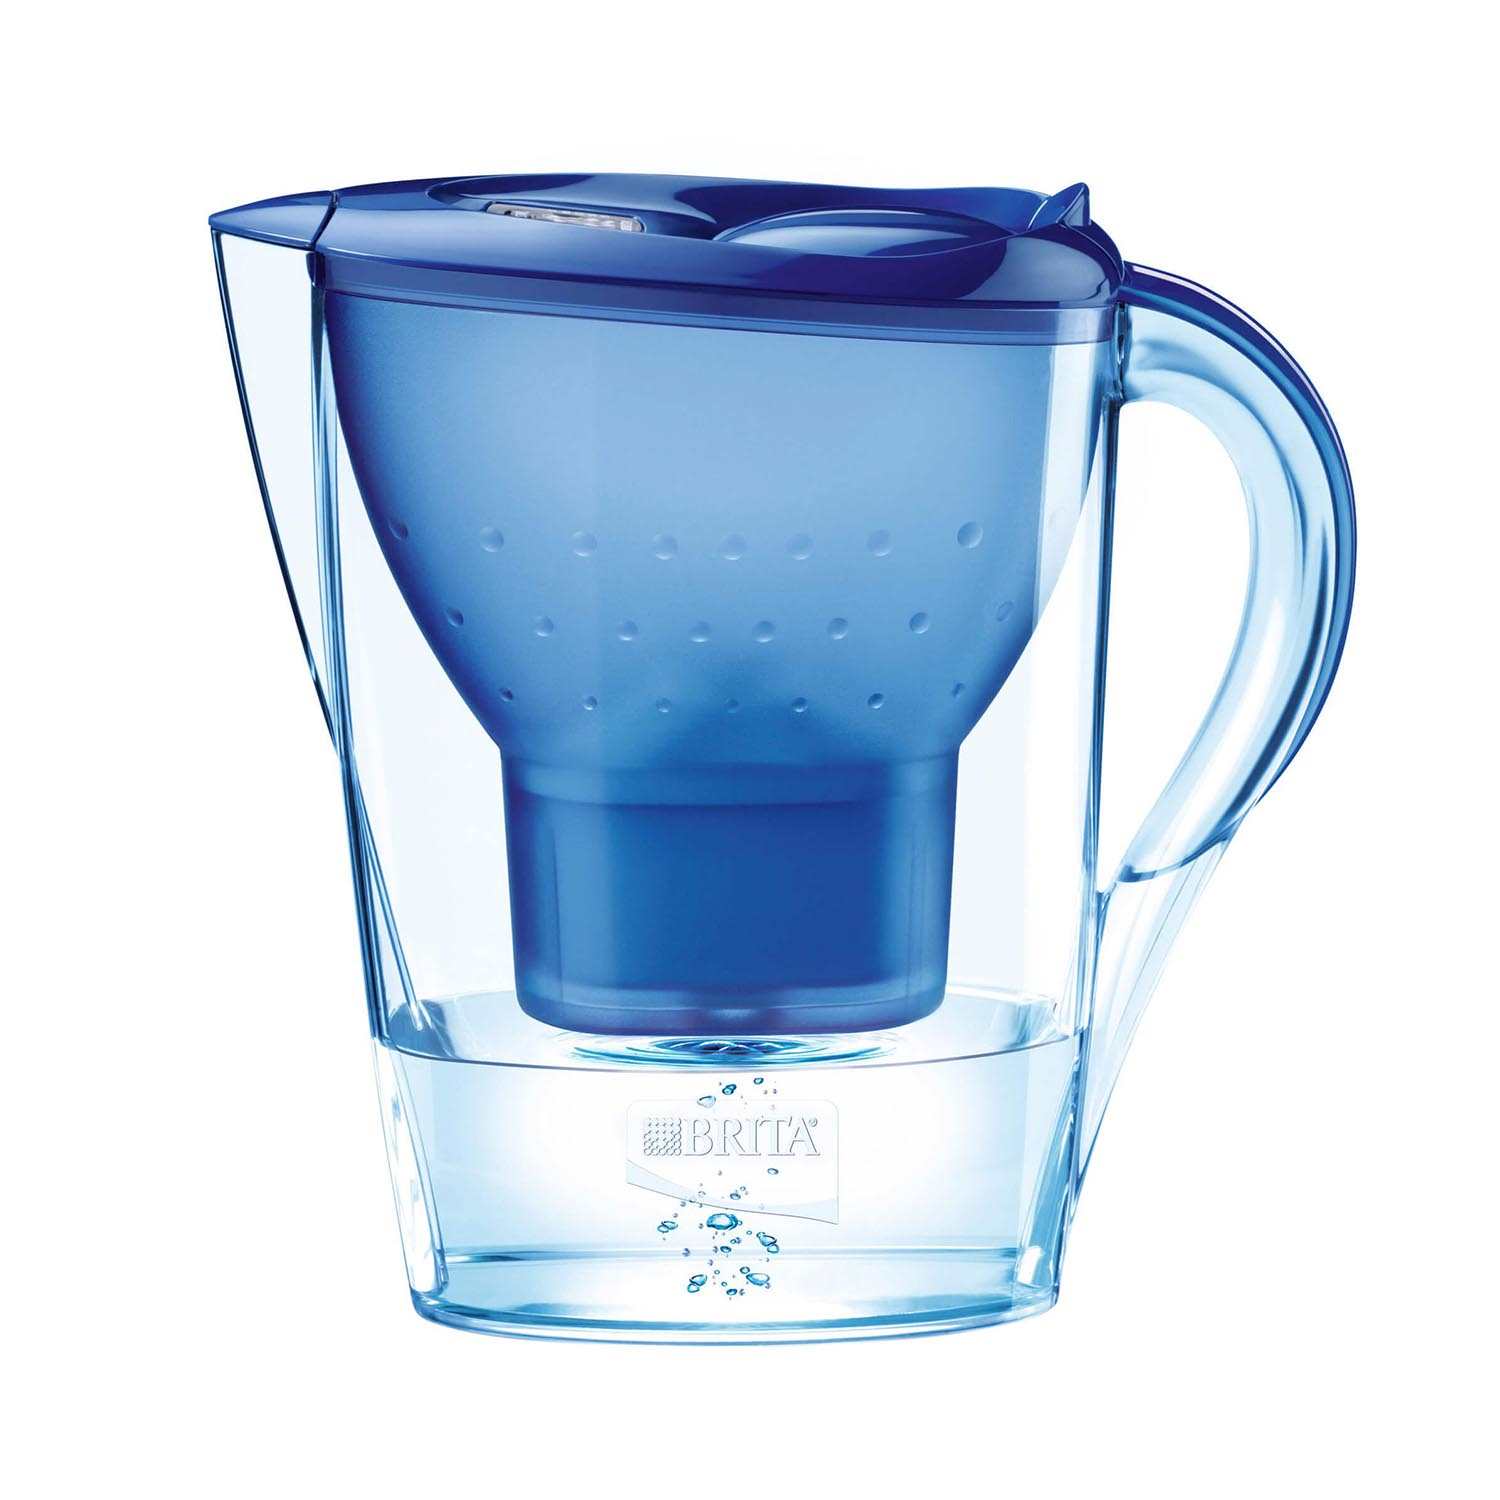 Brita Wasserfilter Marella Cool blau 1,4 l kaufen